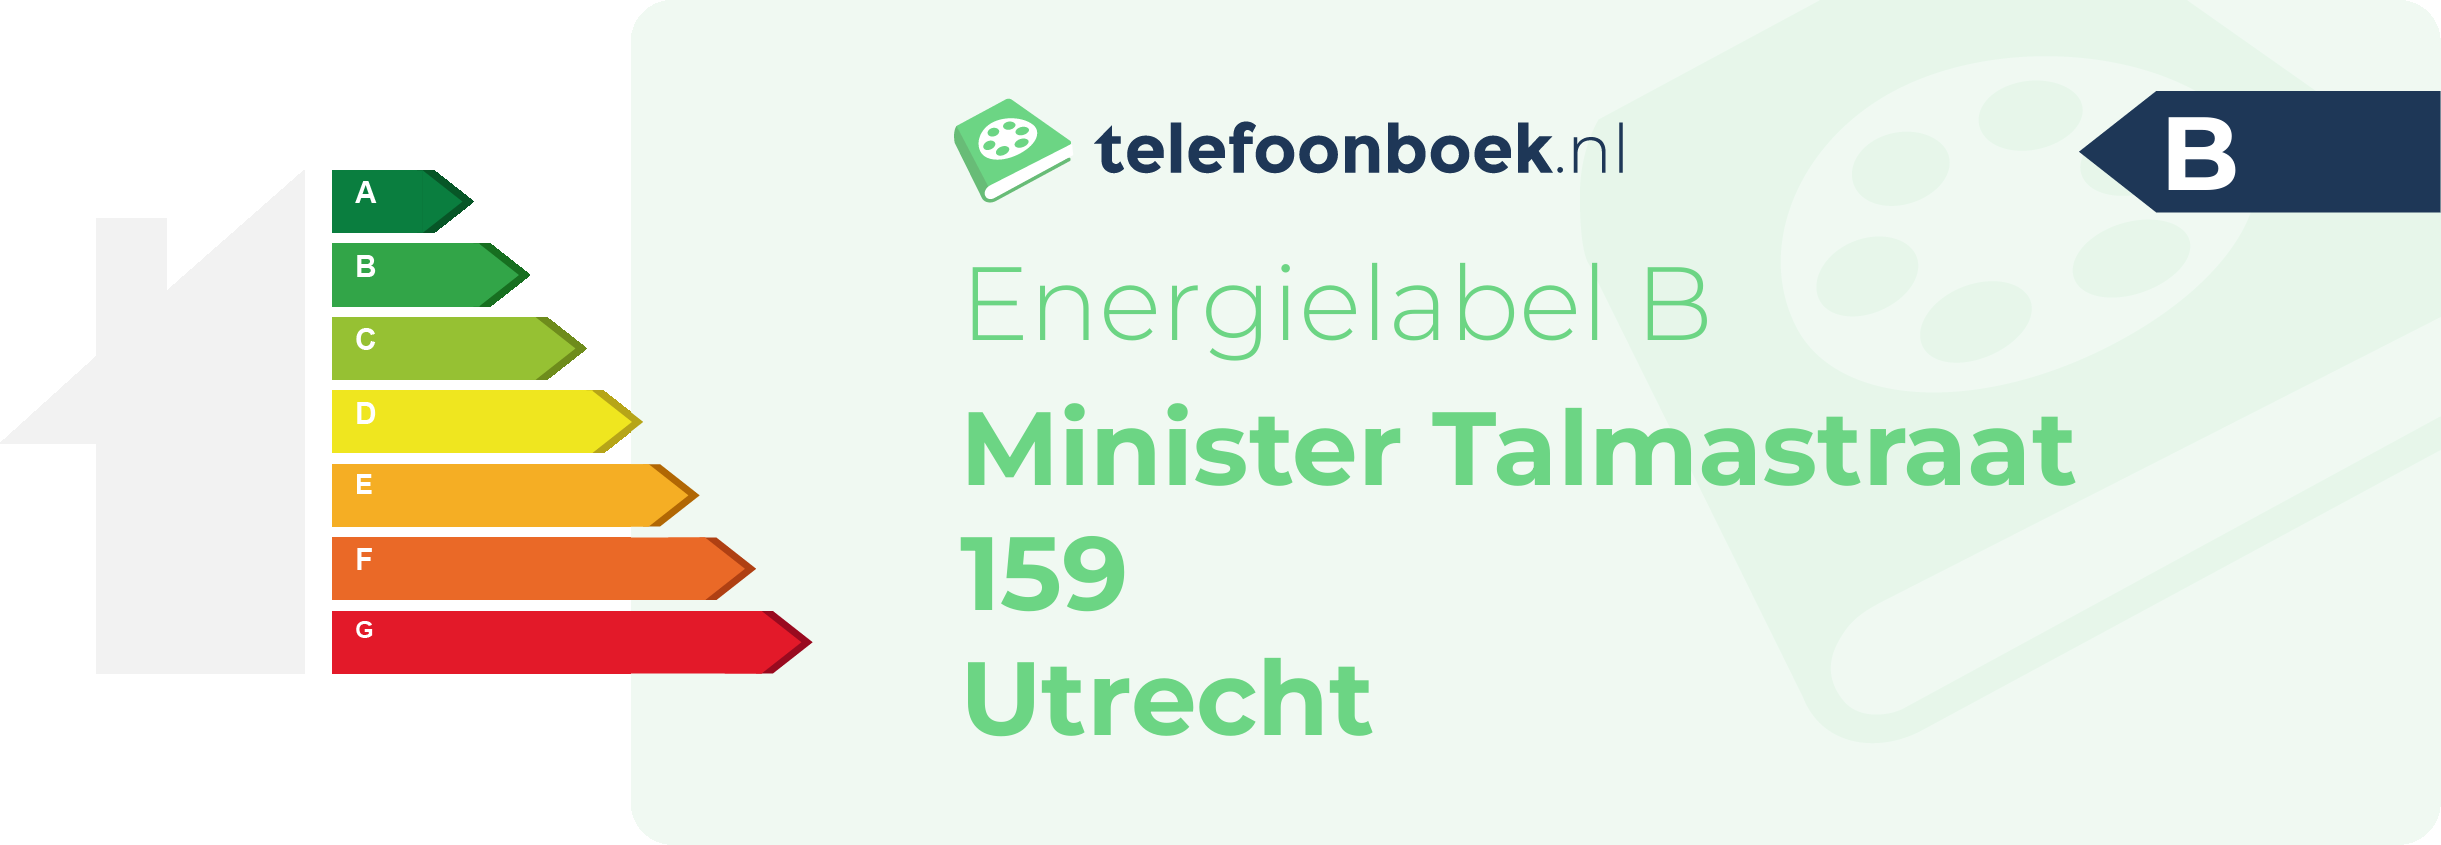 Energielabel Minister Talmastraat 159 Utrecht